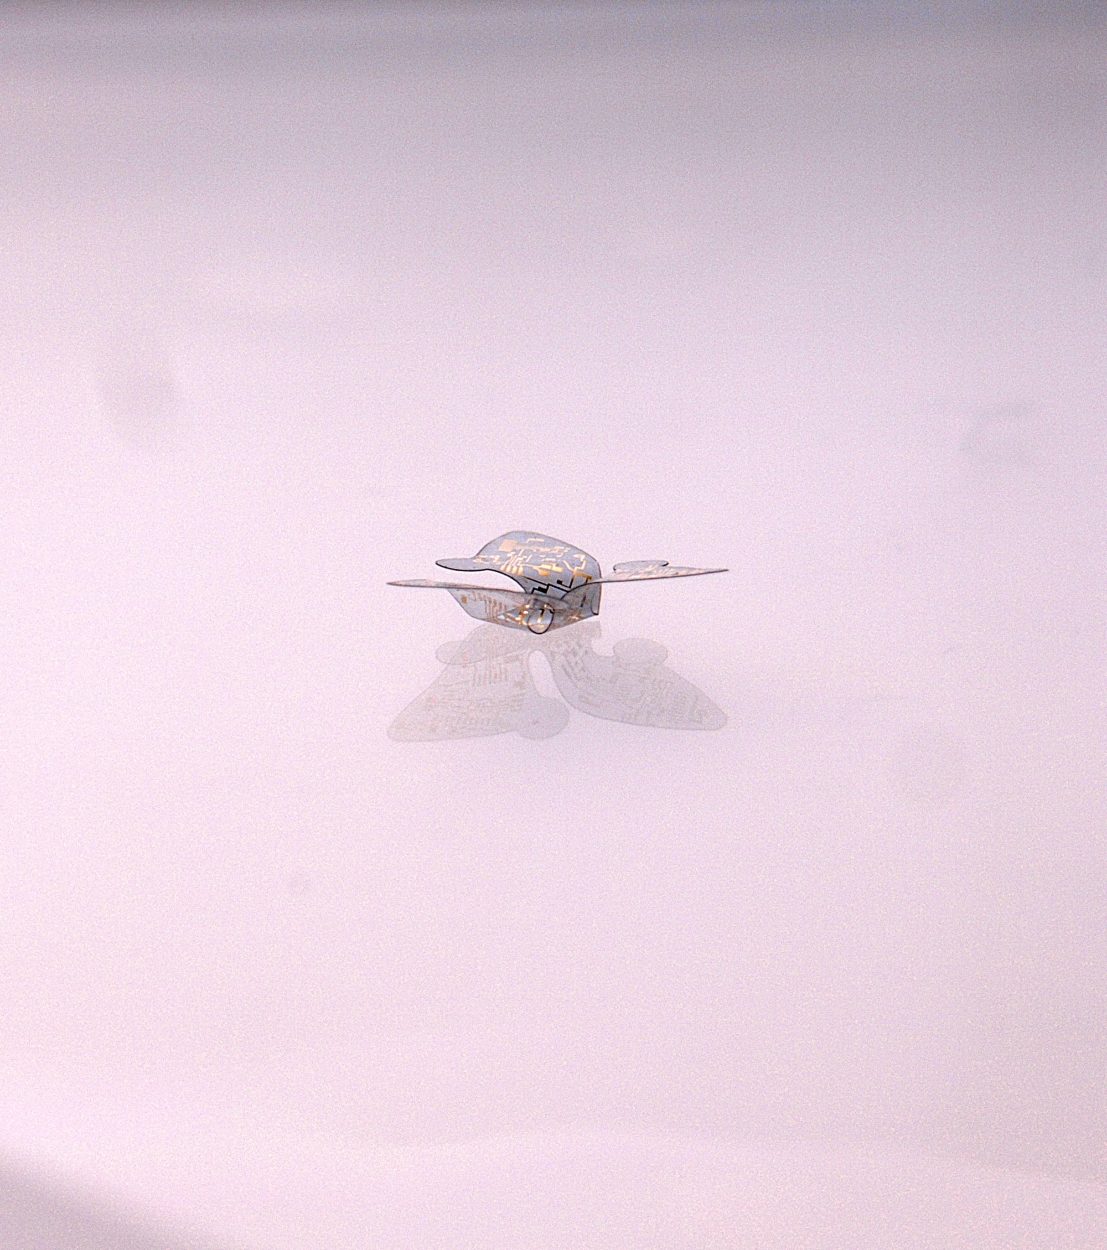 Un drone minuscule.